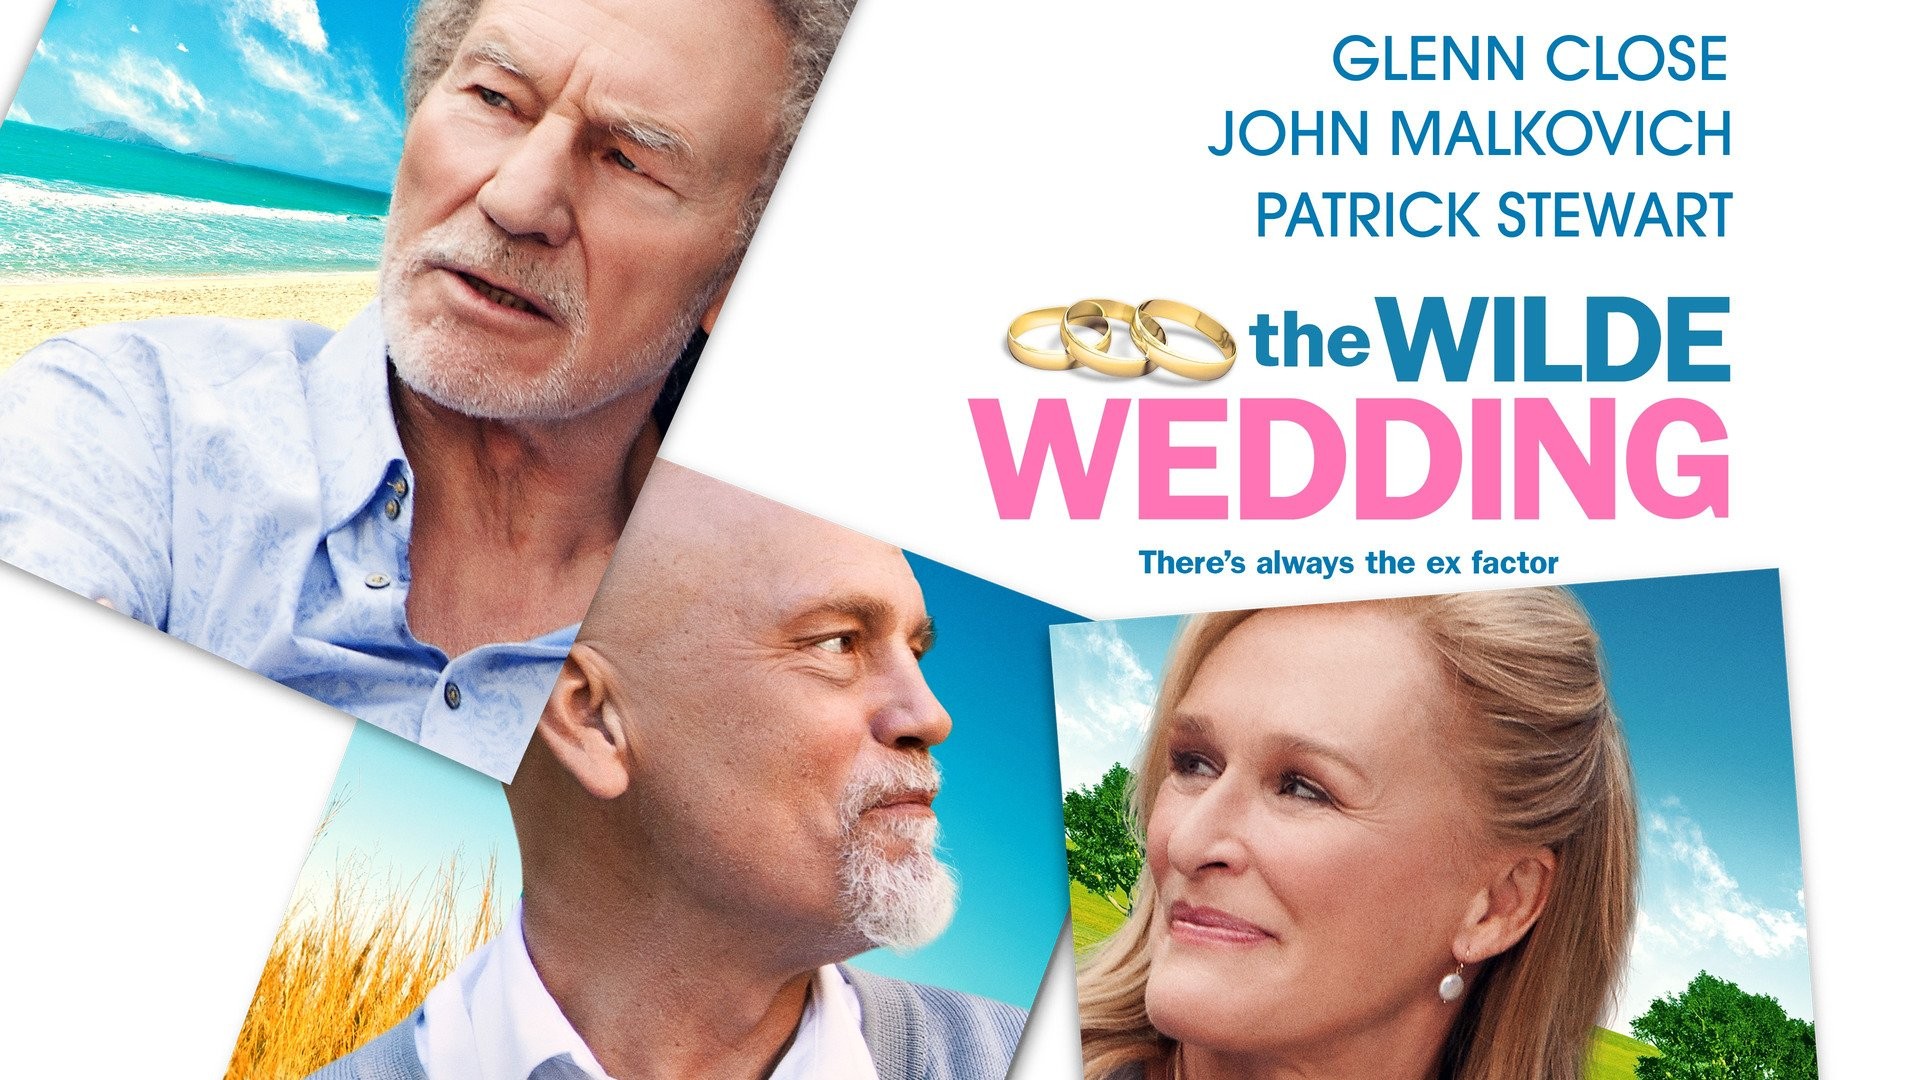 THE WILDE WEDDING Glenn Close John Malkovich Patrick Stewart Comedy DVD NEW  31398272298